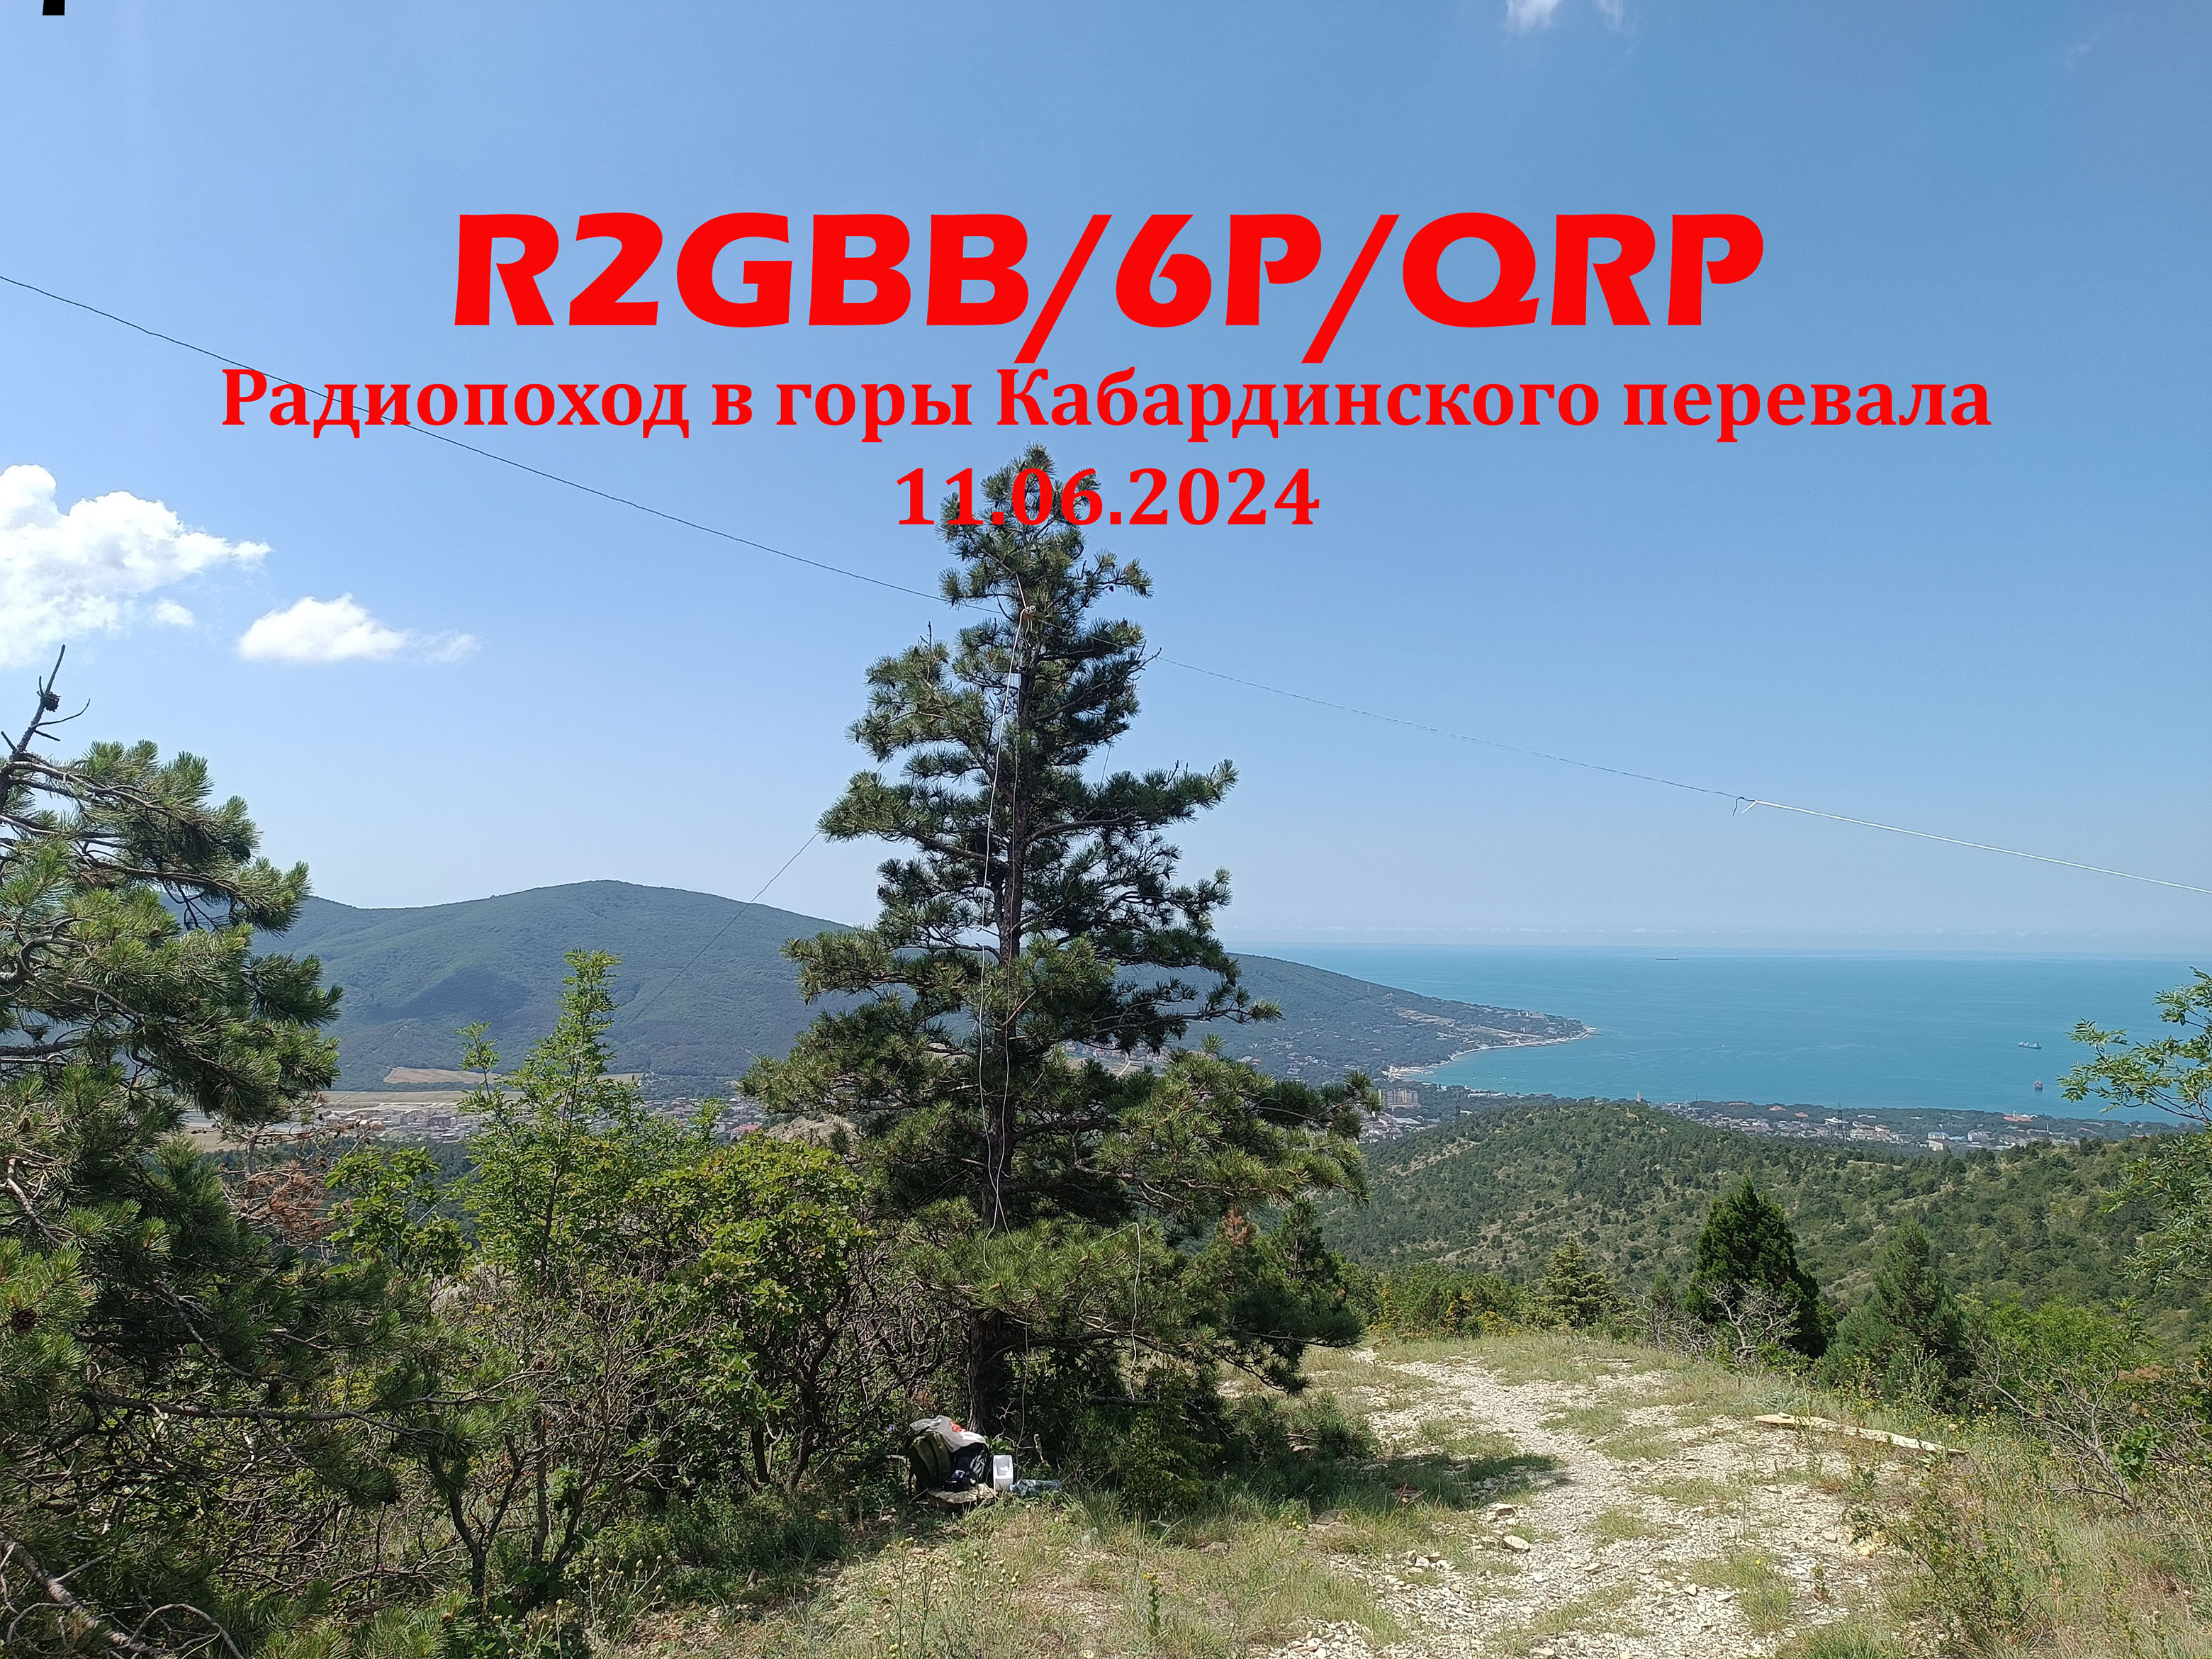 R2GBB/6P/QRP   Радиопоход на Кабардинский перевал с uSDX.